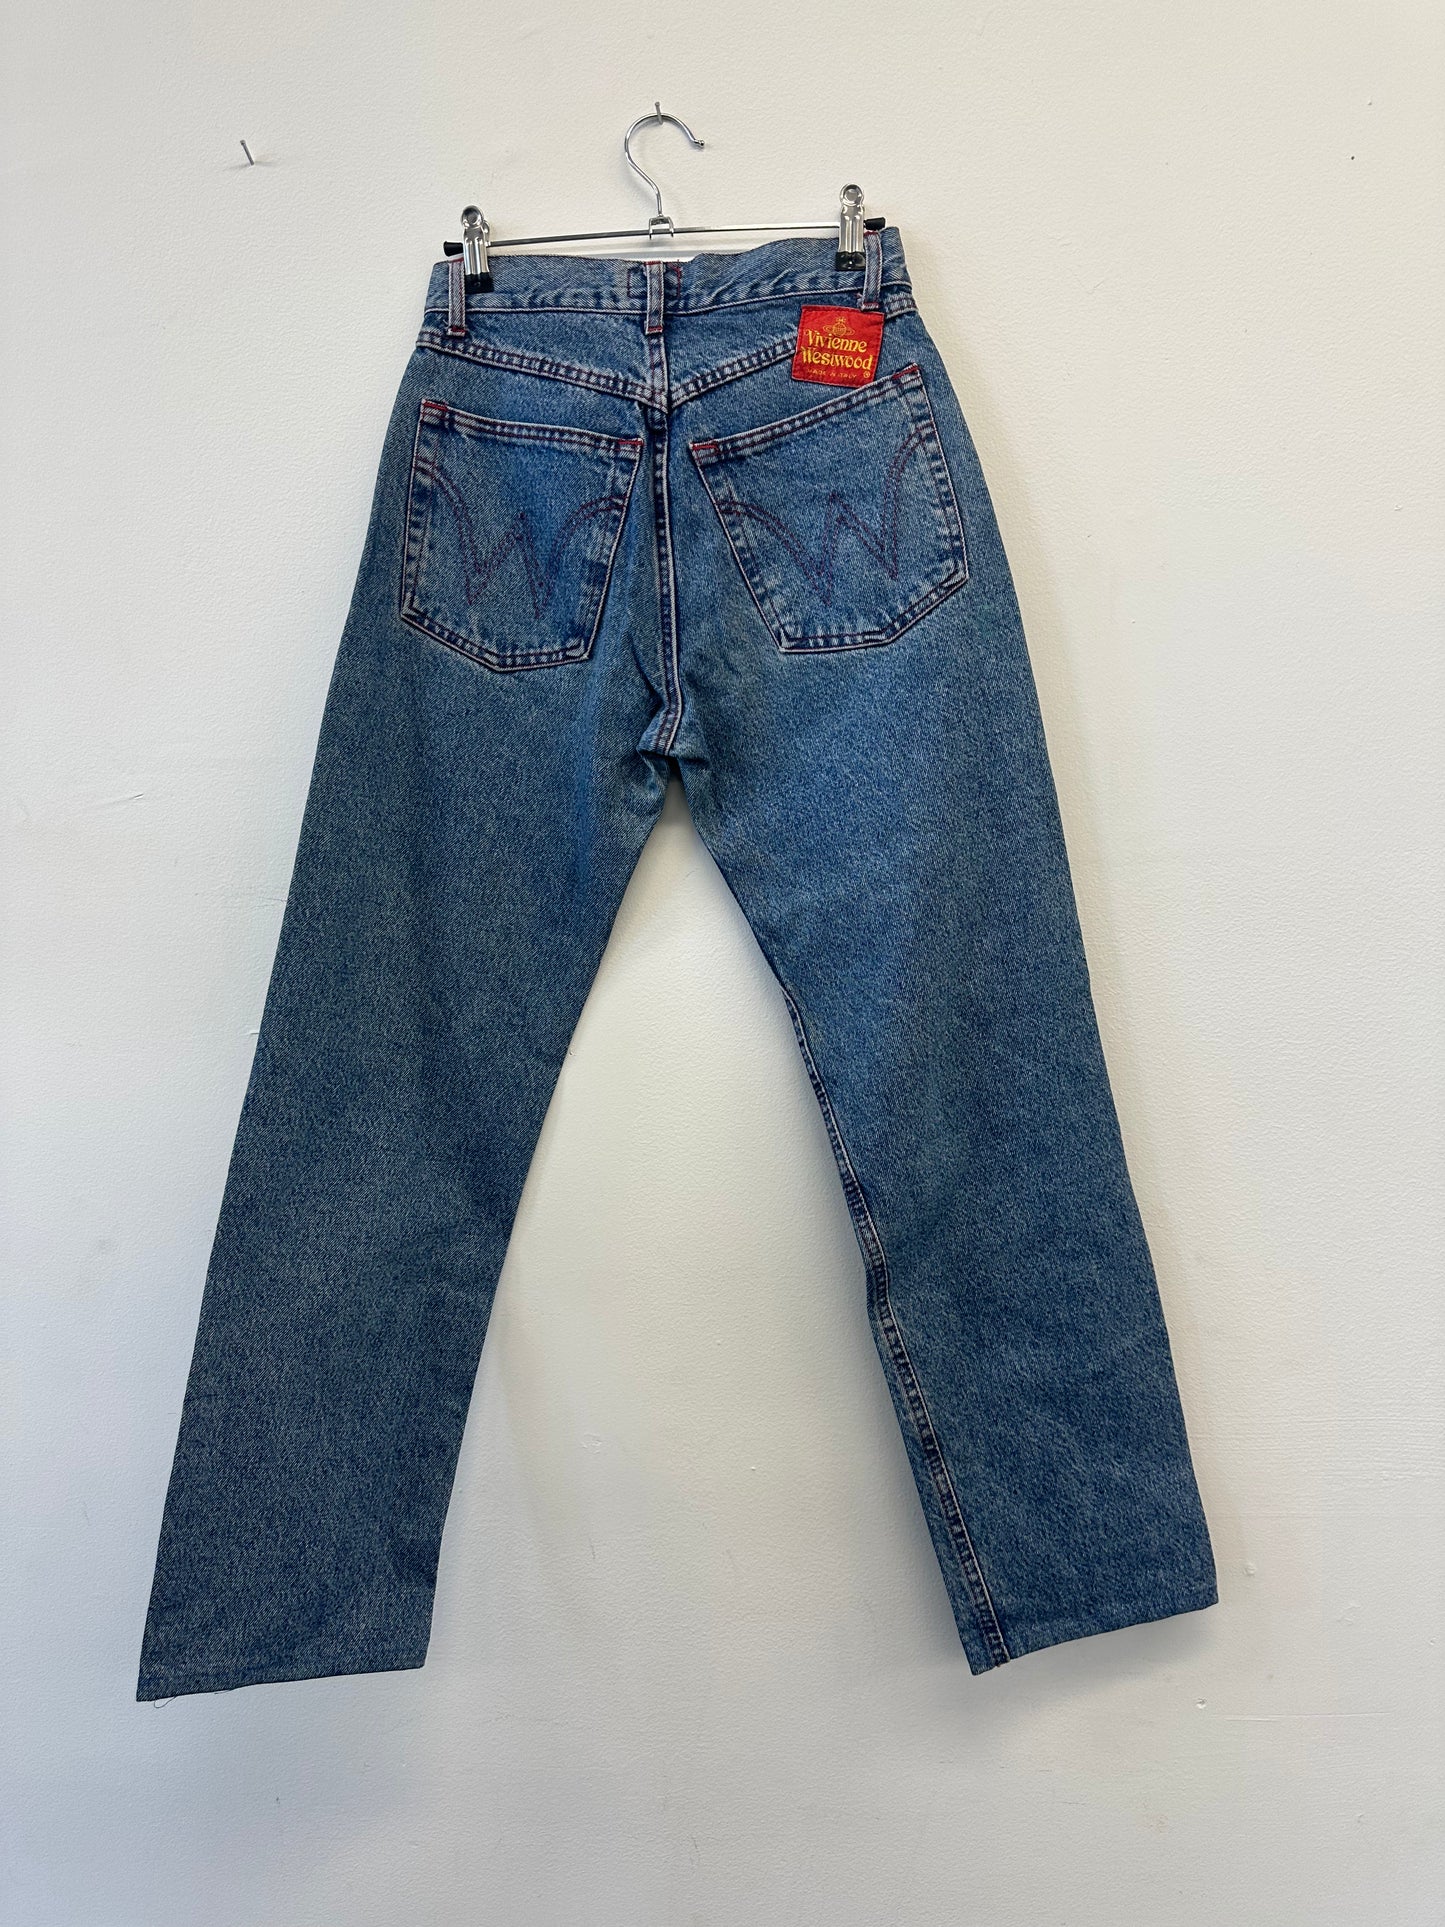 Vivienne Westwood FW 1994 Jeans